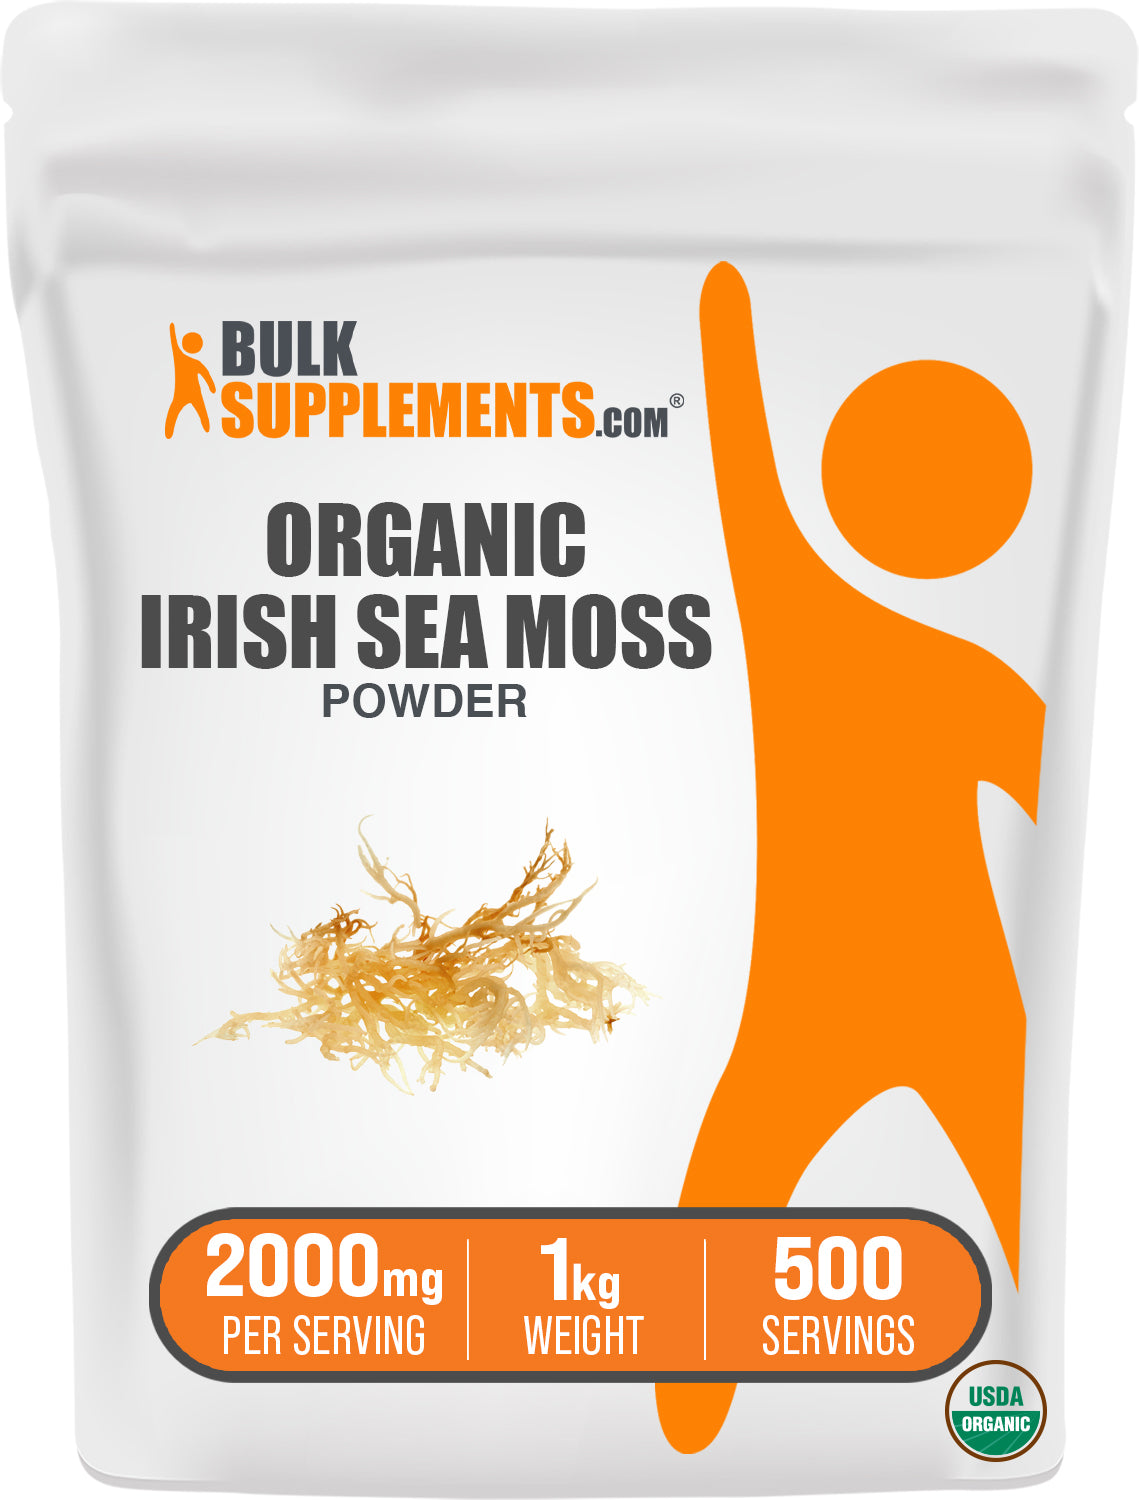 BulkSupplements.com Organic Irish Sea Moss Powder 1kg Bag